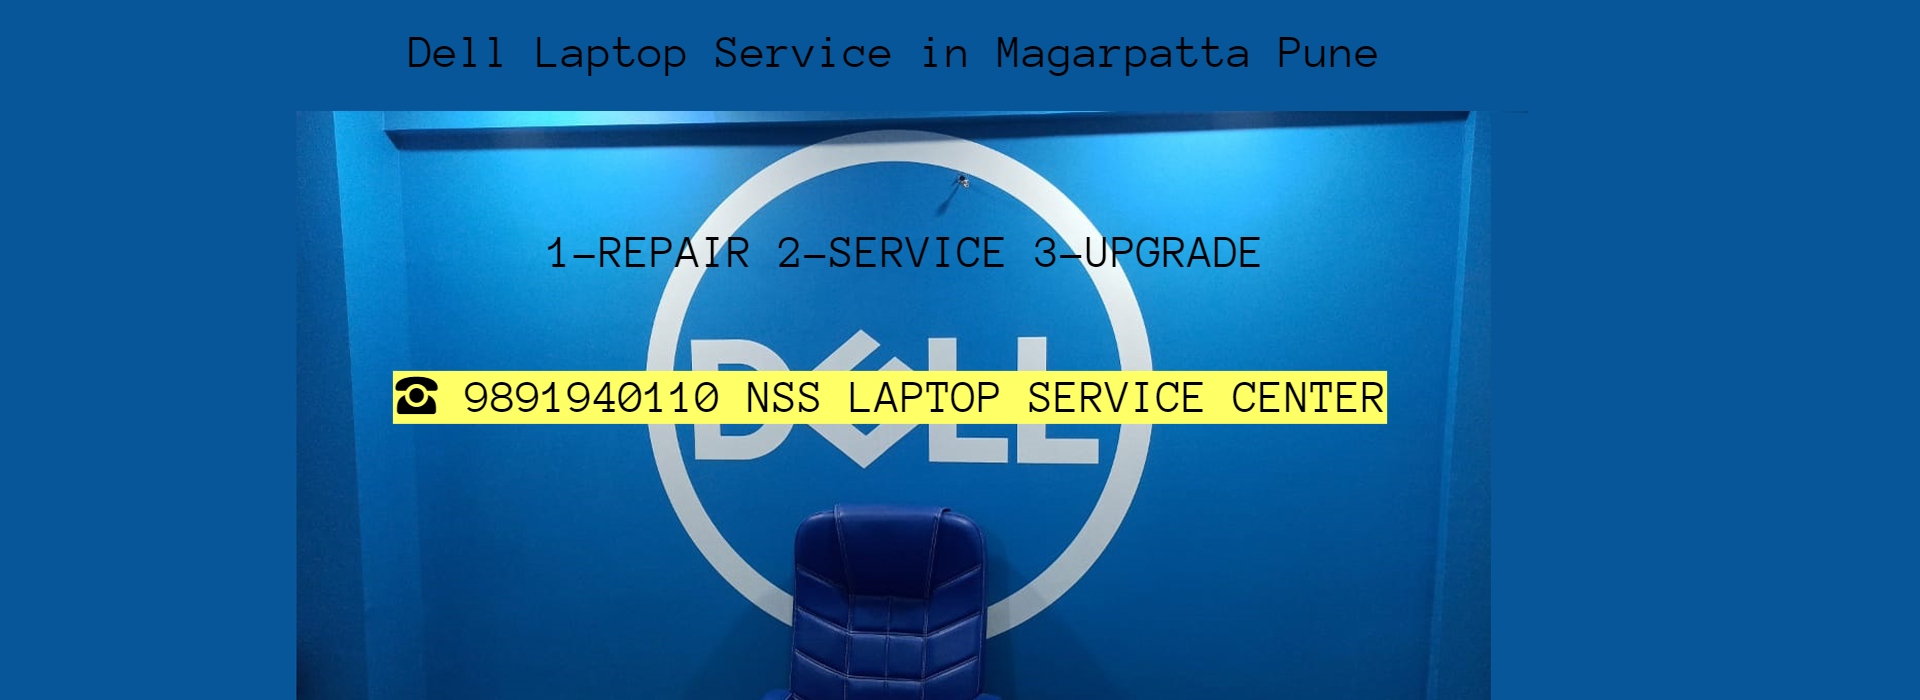 Dell Service Center Magarpatta Pune ☎ 9891940110 - NSS